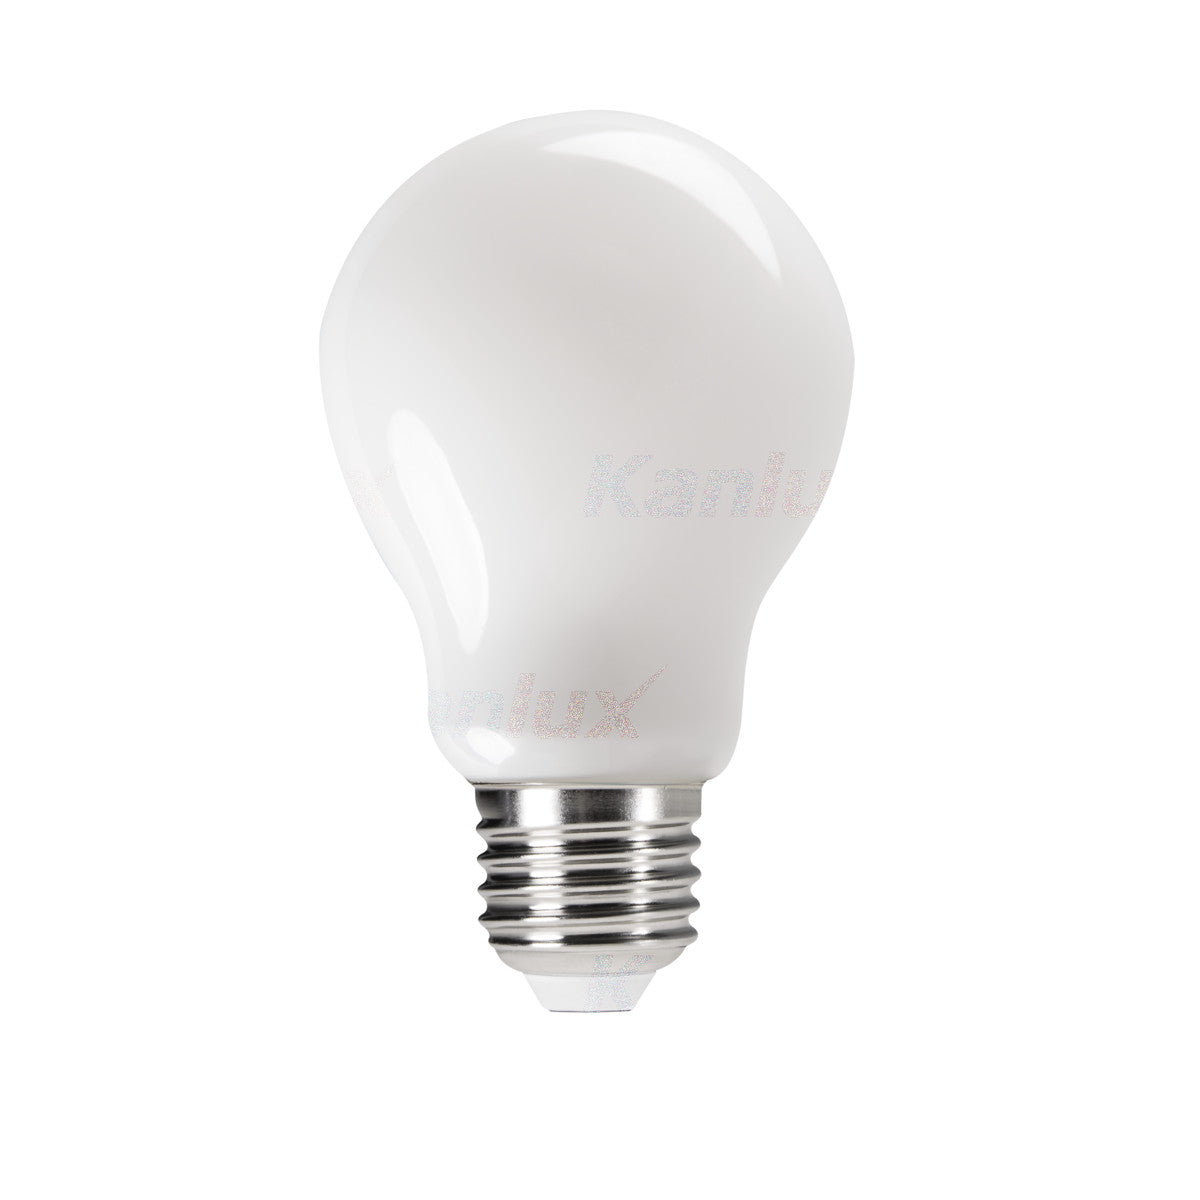 Kanlux XLED A60 E27 7W Filament LED Traditional Light Bulb Lamp